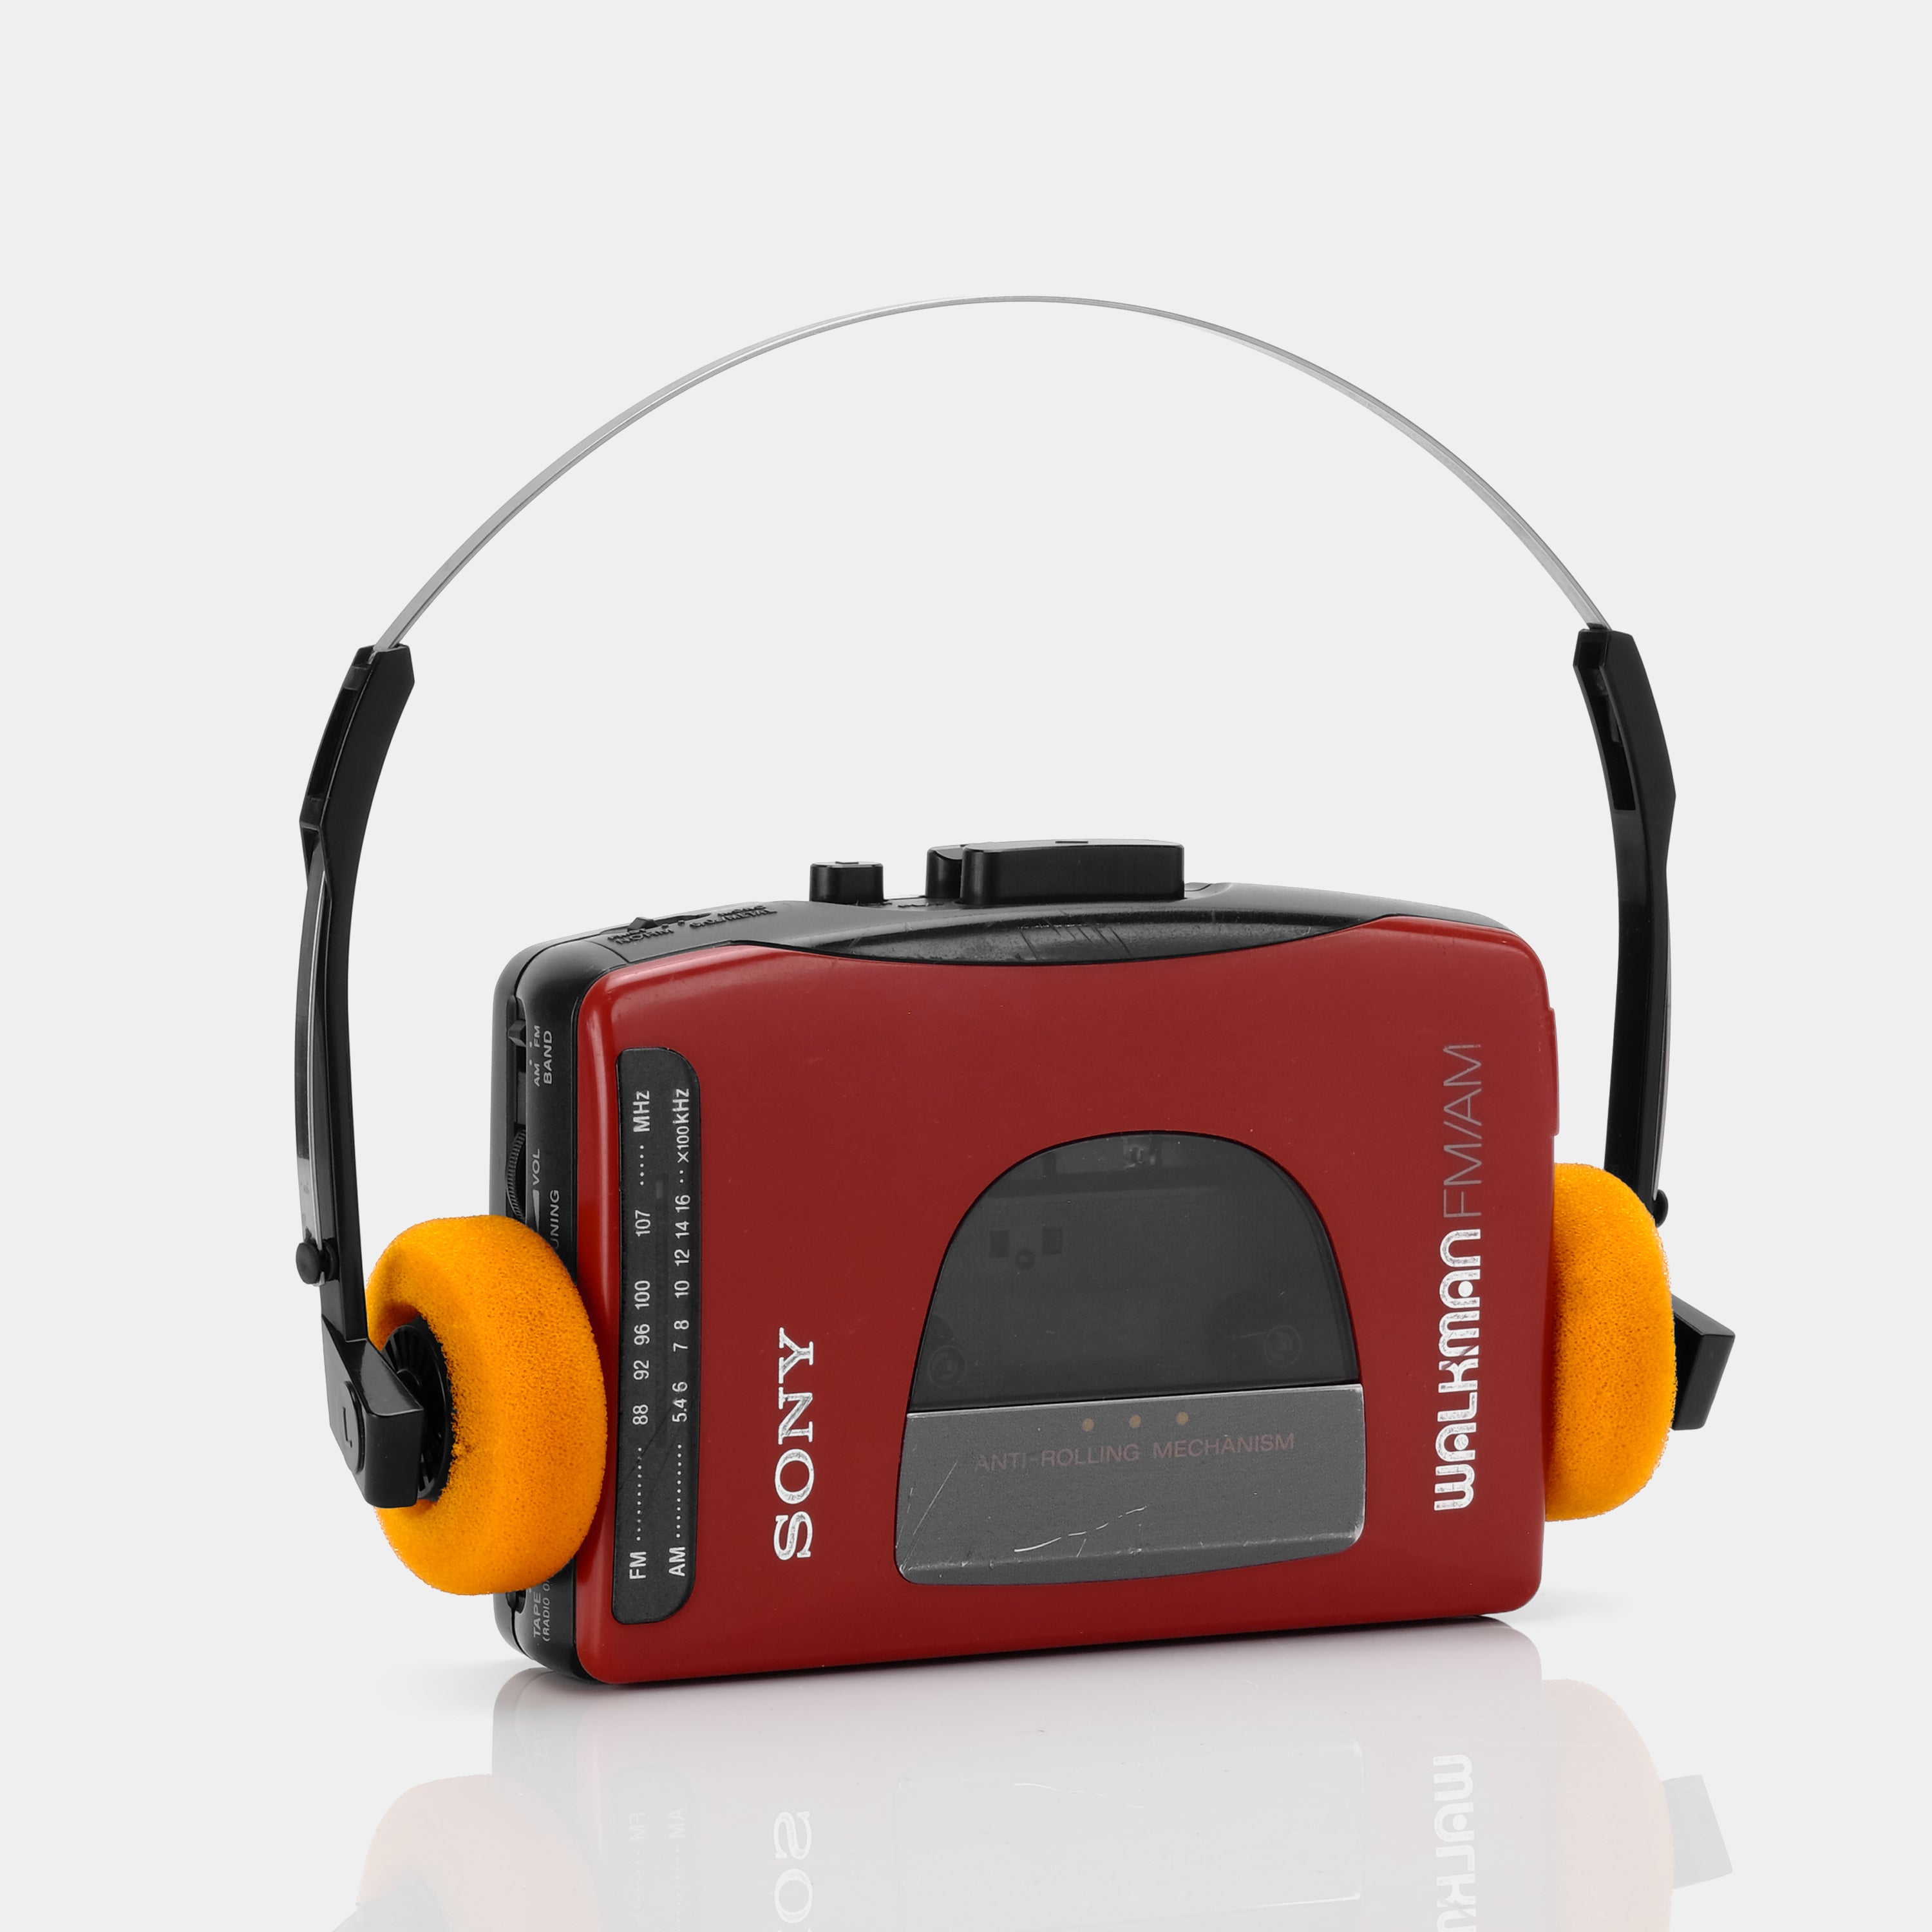 Sony Walkman WM-FX10 Portable Cassette Player (B-Grade)